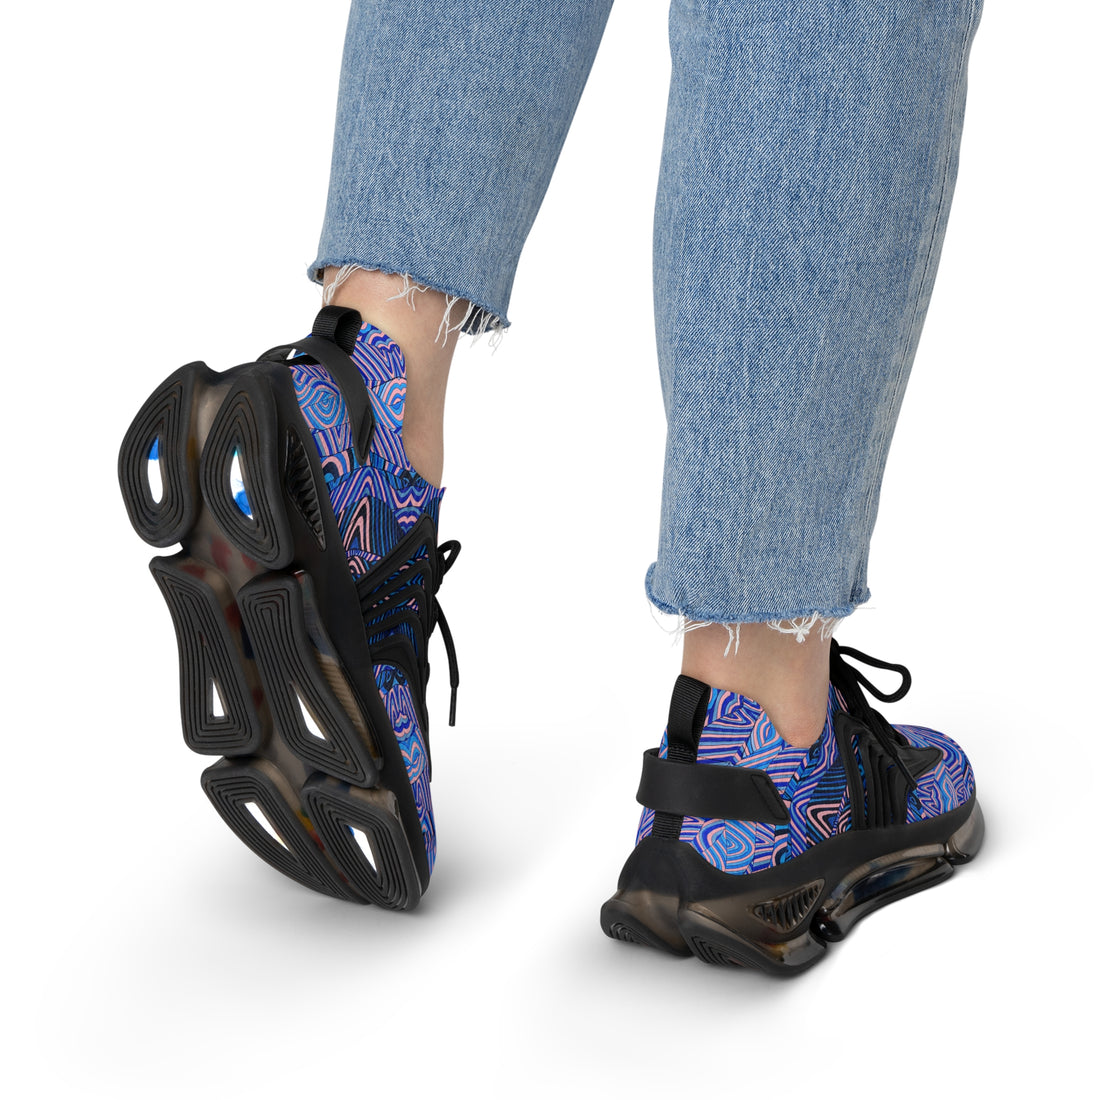 Blush Sonic OTT Women's Mesh Knit Sneakers